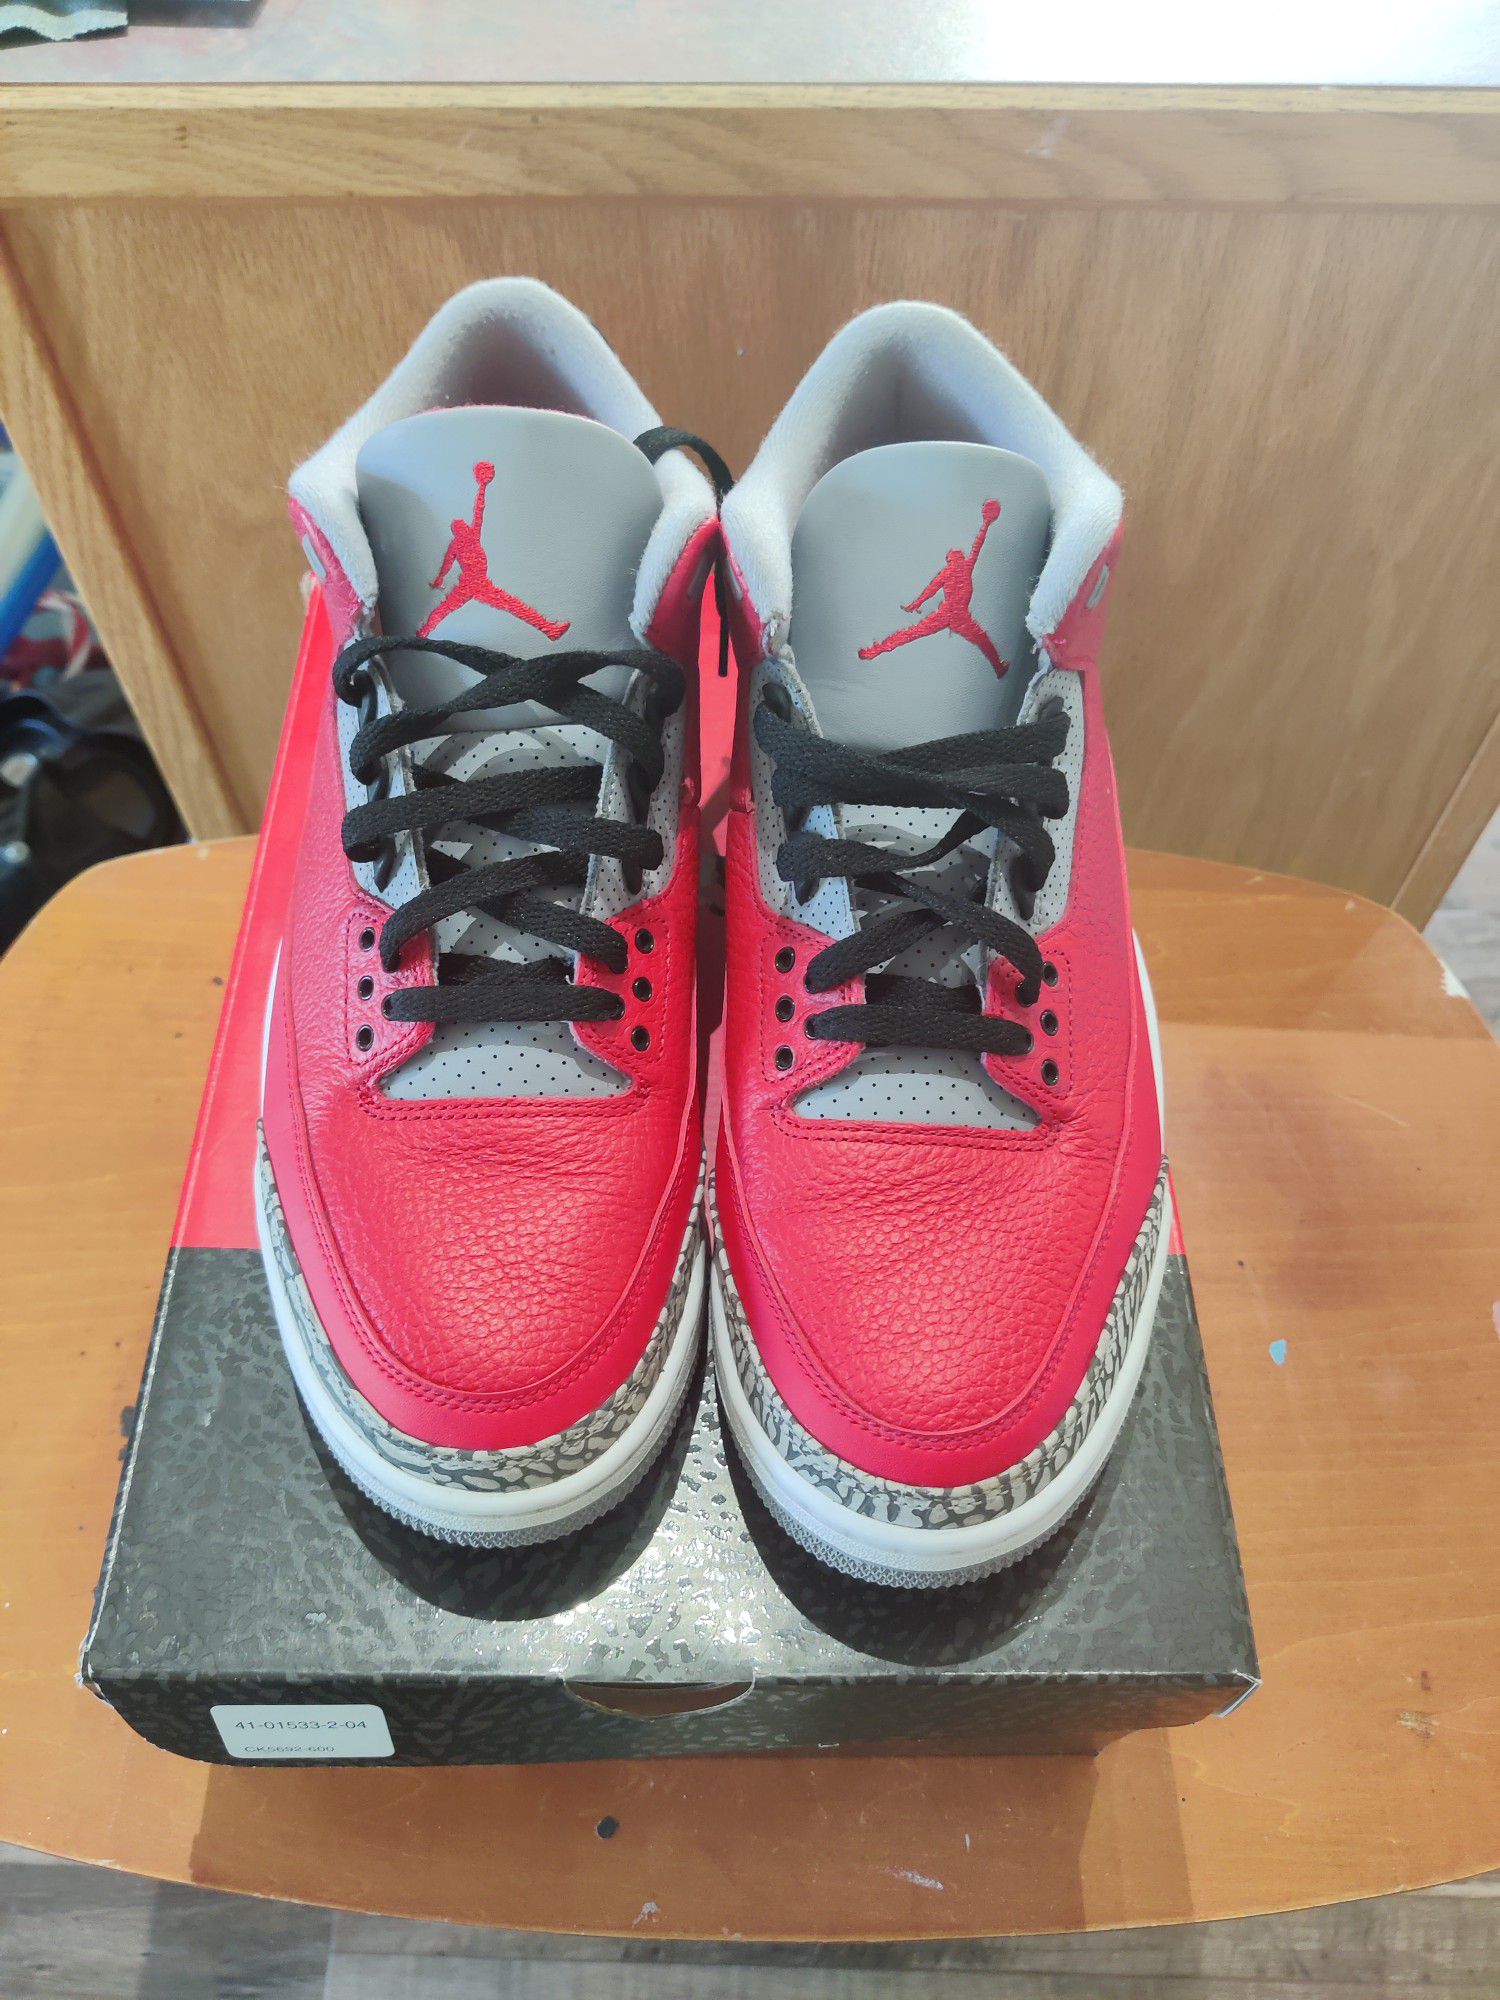 Jordan 3 red cement size 11.5